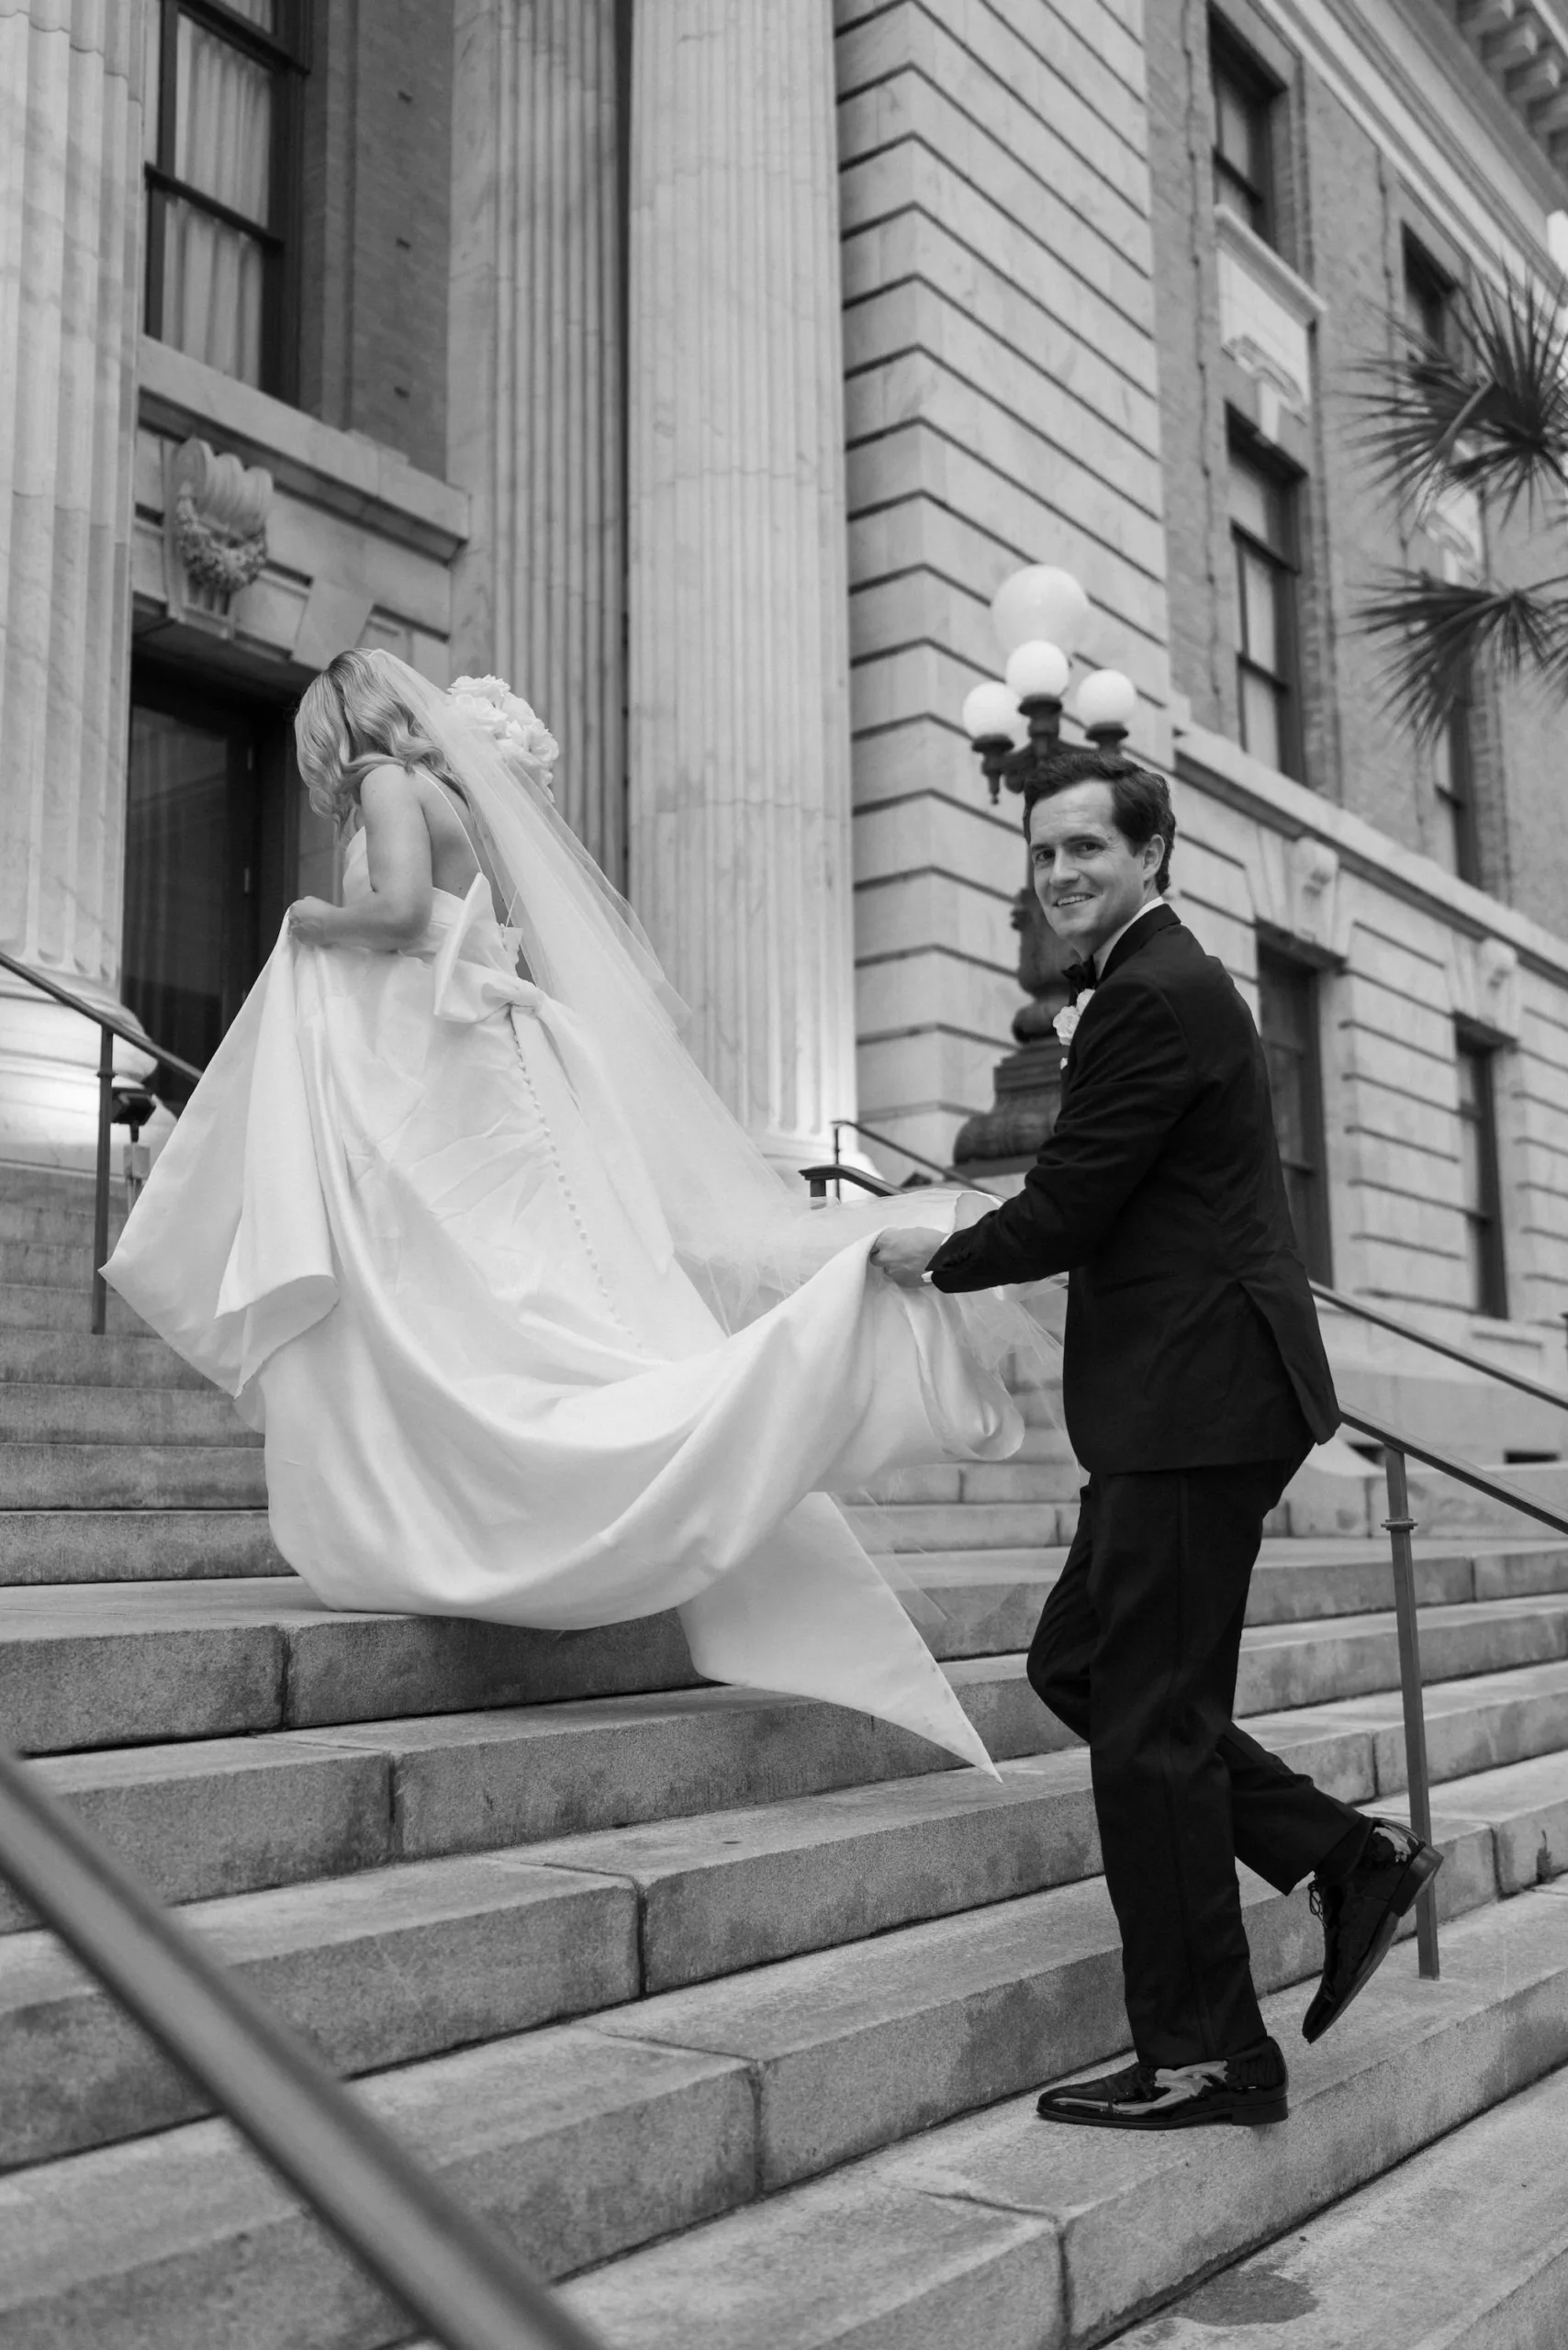 Romantic White Satin A Line Wedding Dress with Bow Inspiration | Groom's Black Tie Tuxedo Attire Ideas | Downtown Tampa Venue Le Meridien